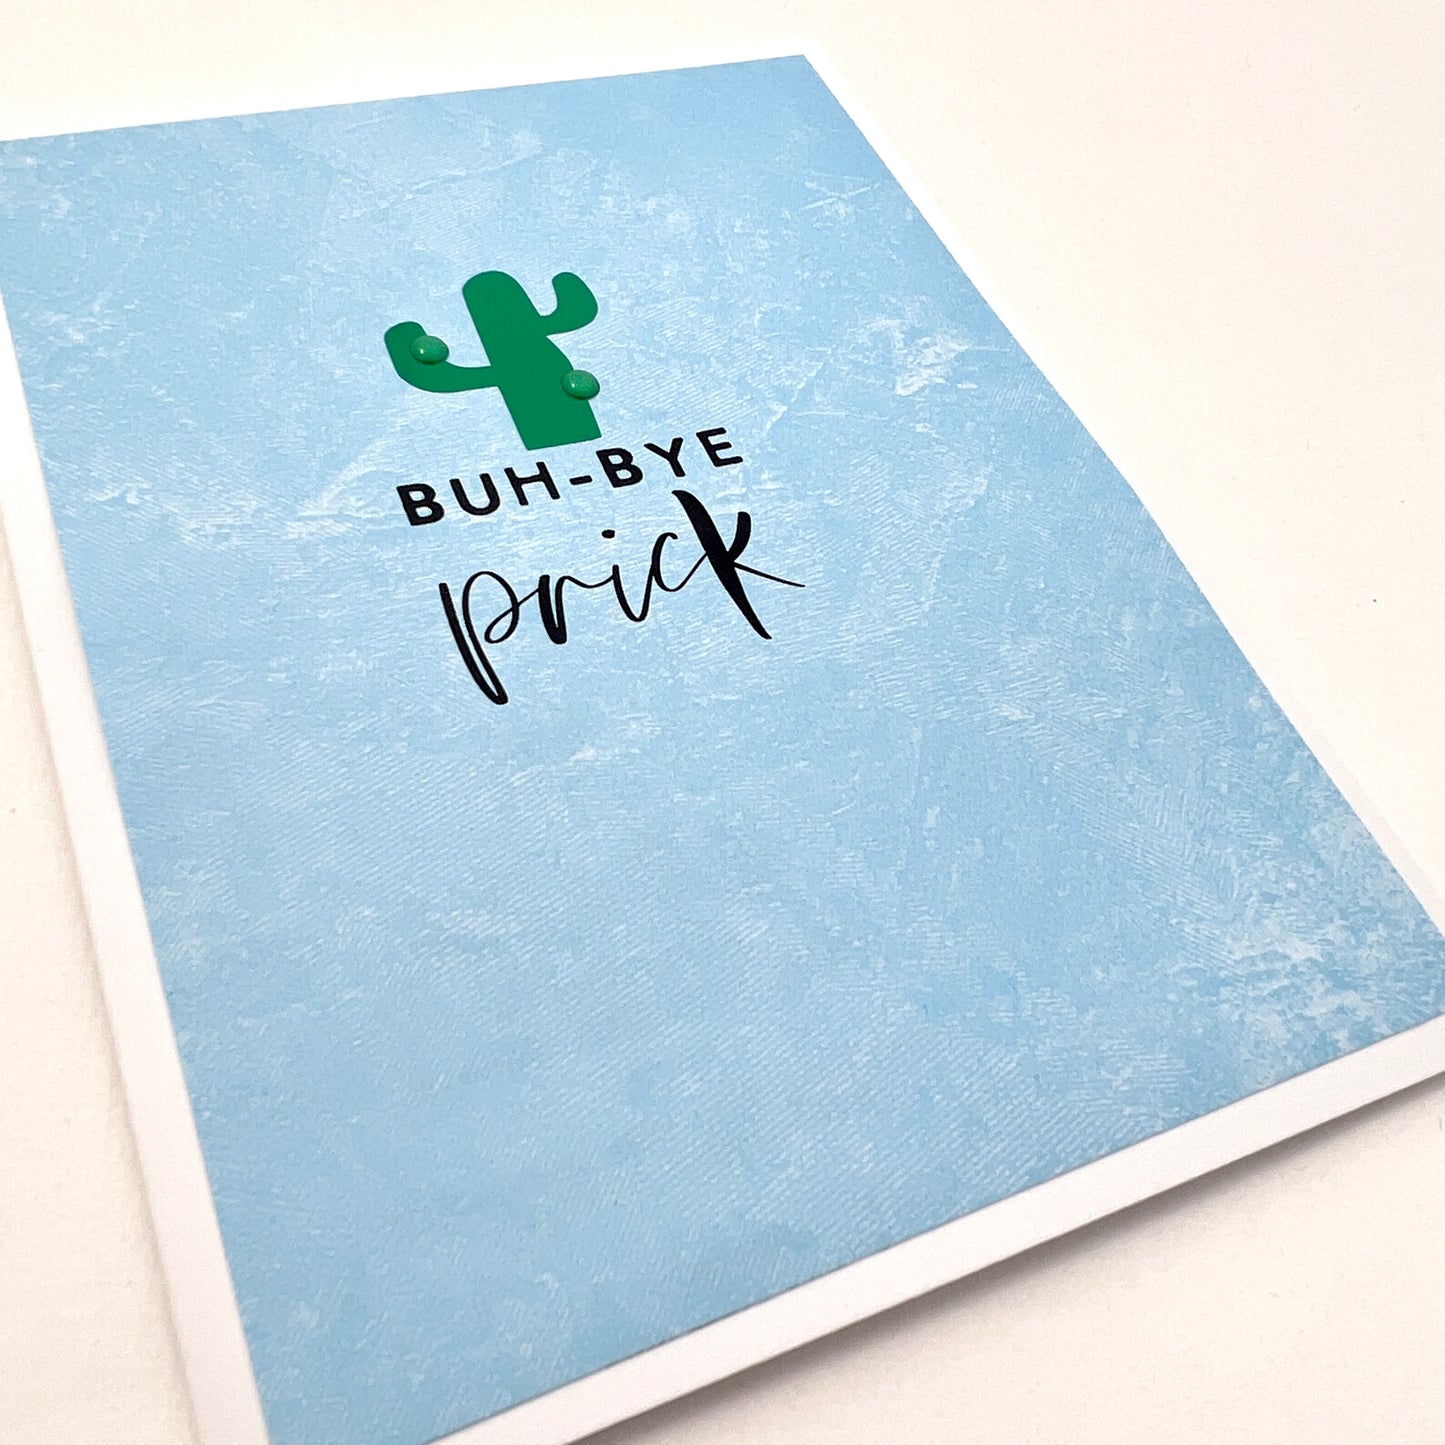 Buh-Bye Prick cactus card